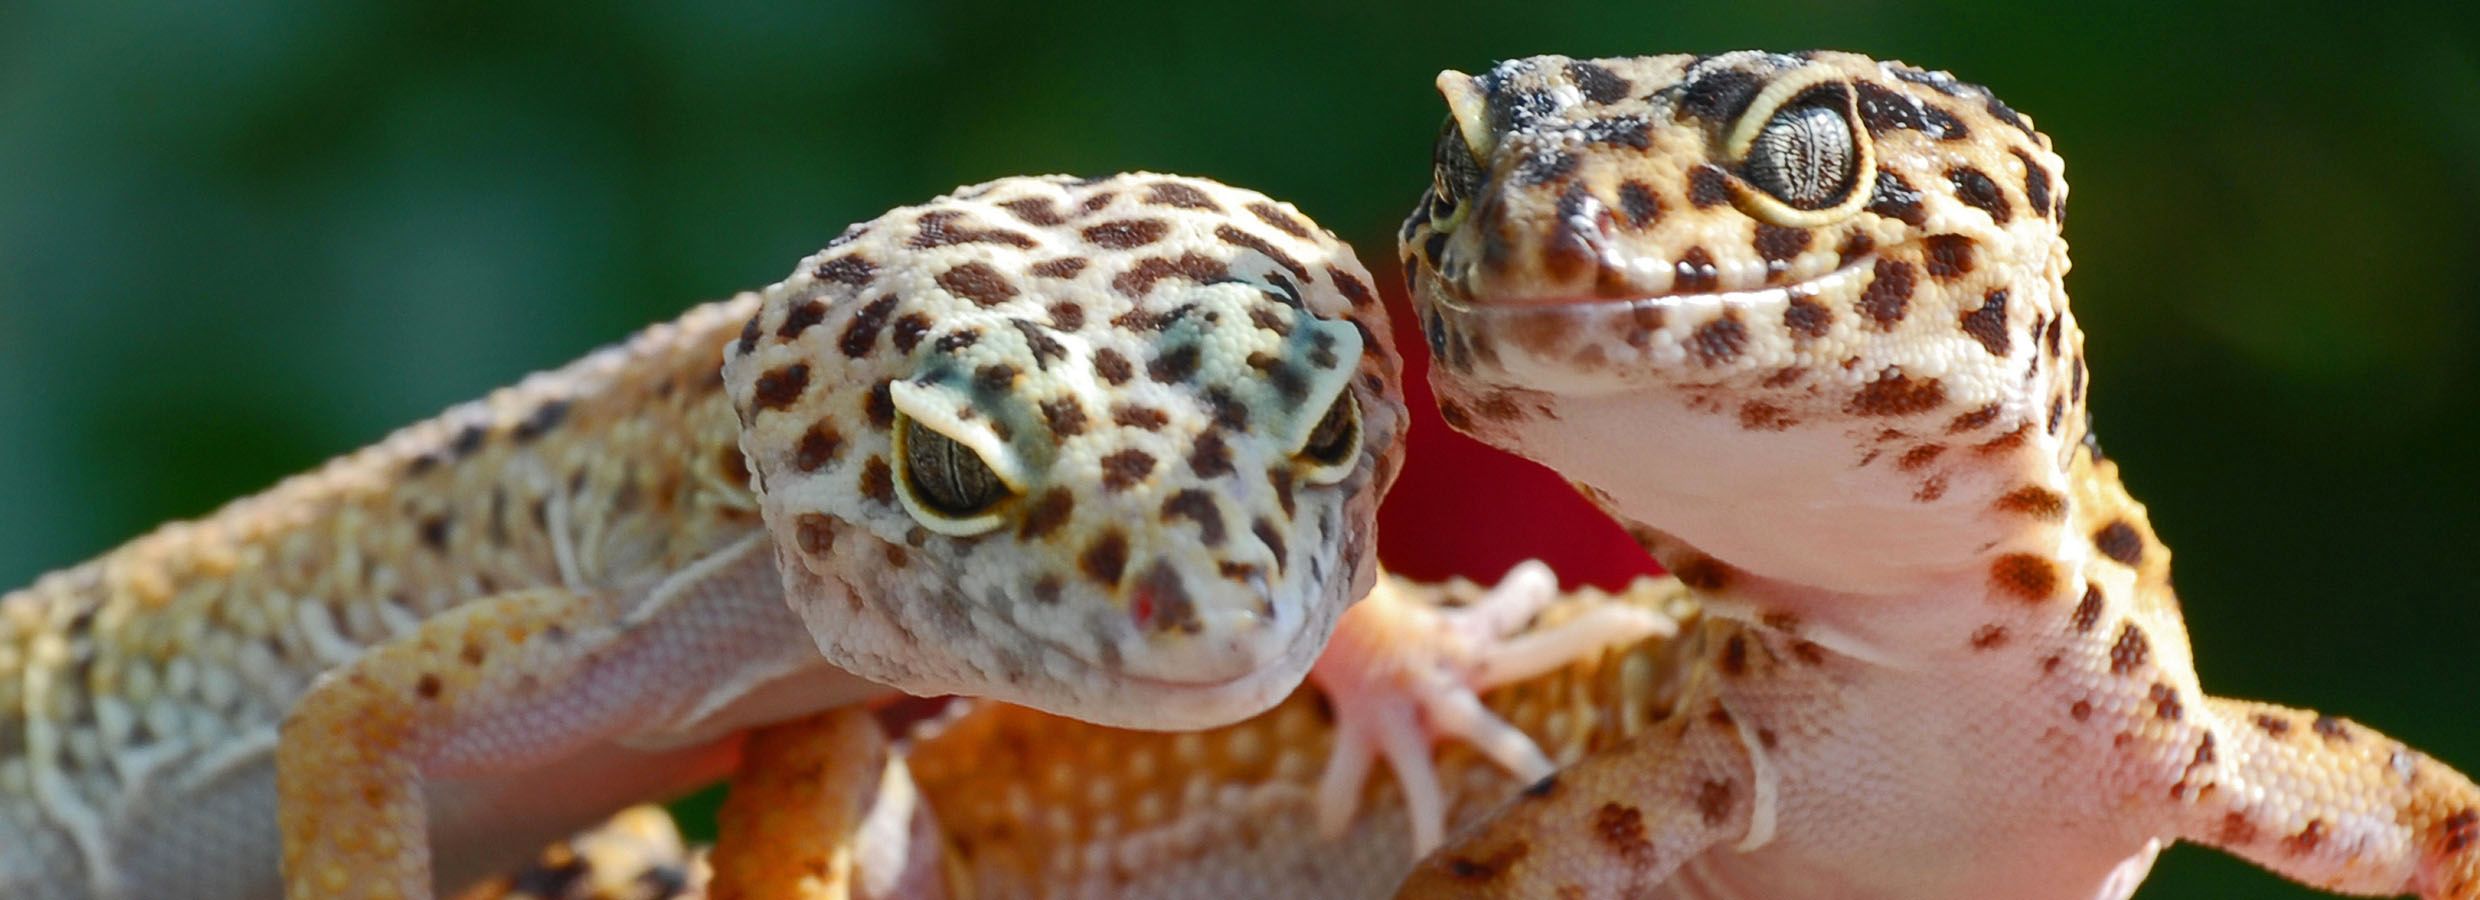 leopard gecko care sheet petco